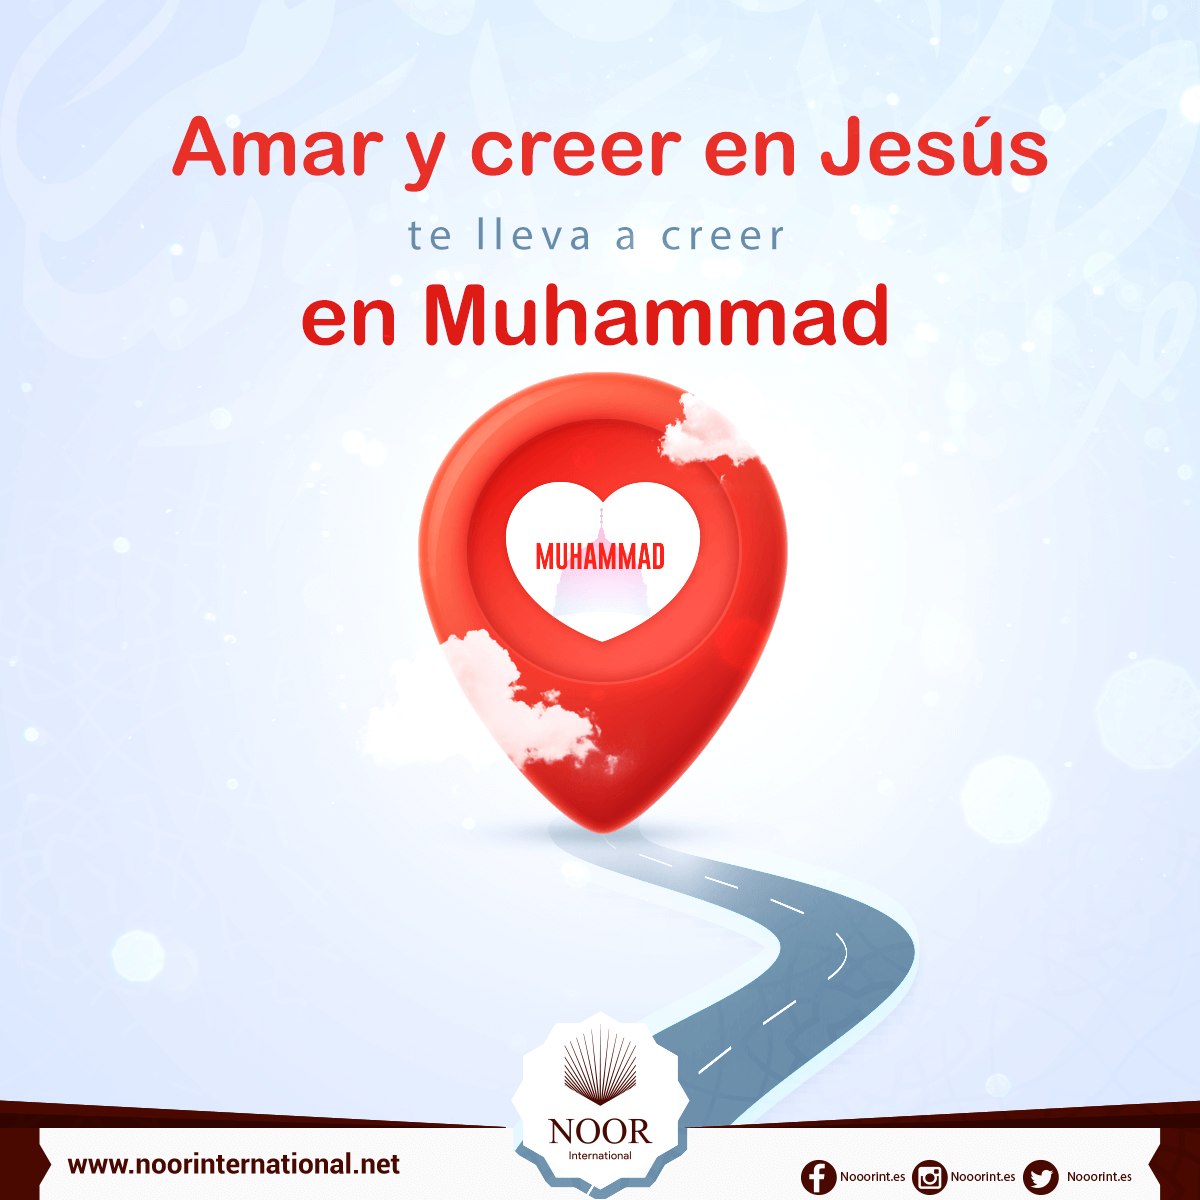 Amar y creer en Jesús te lleva a creer en Muhammad